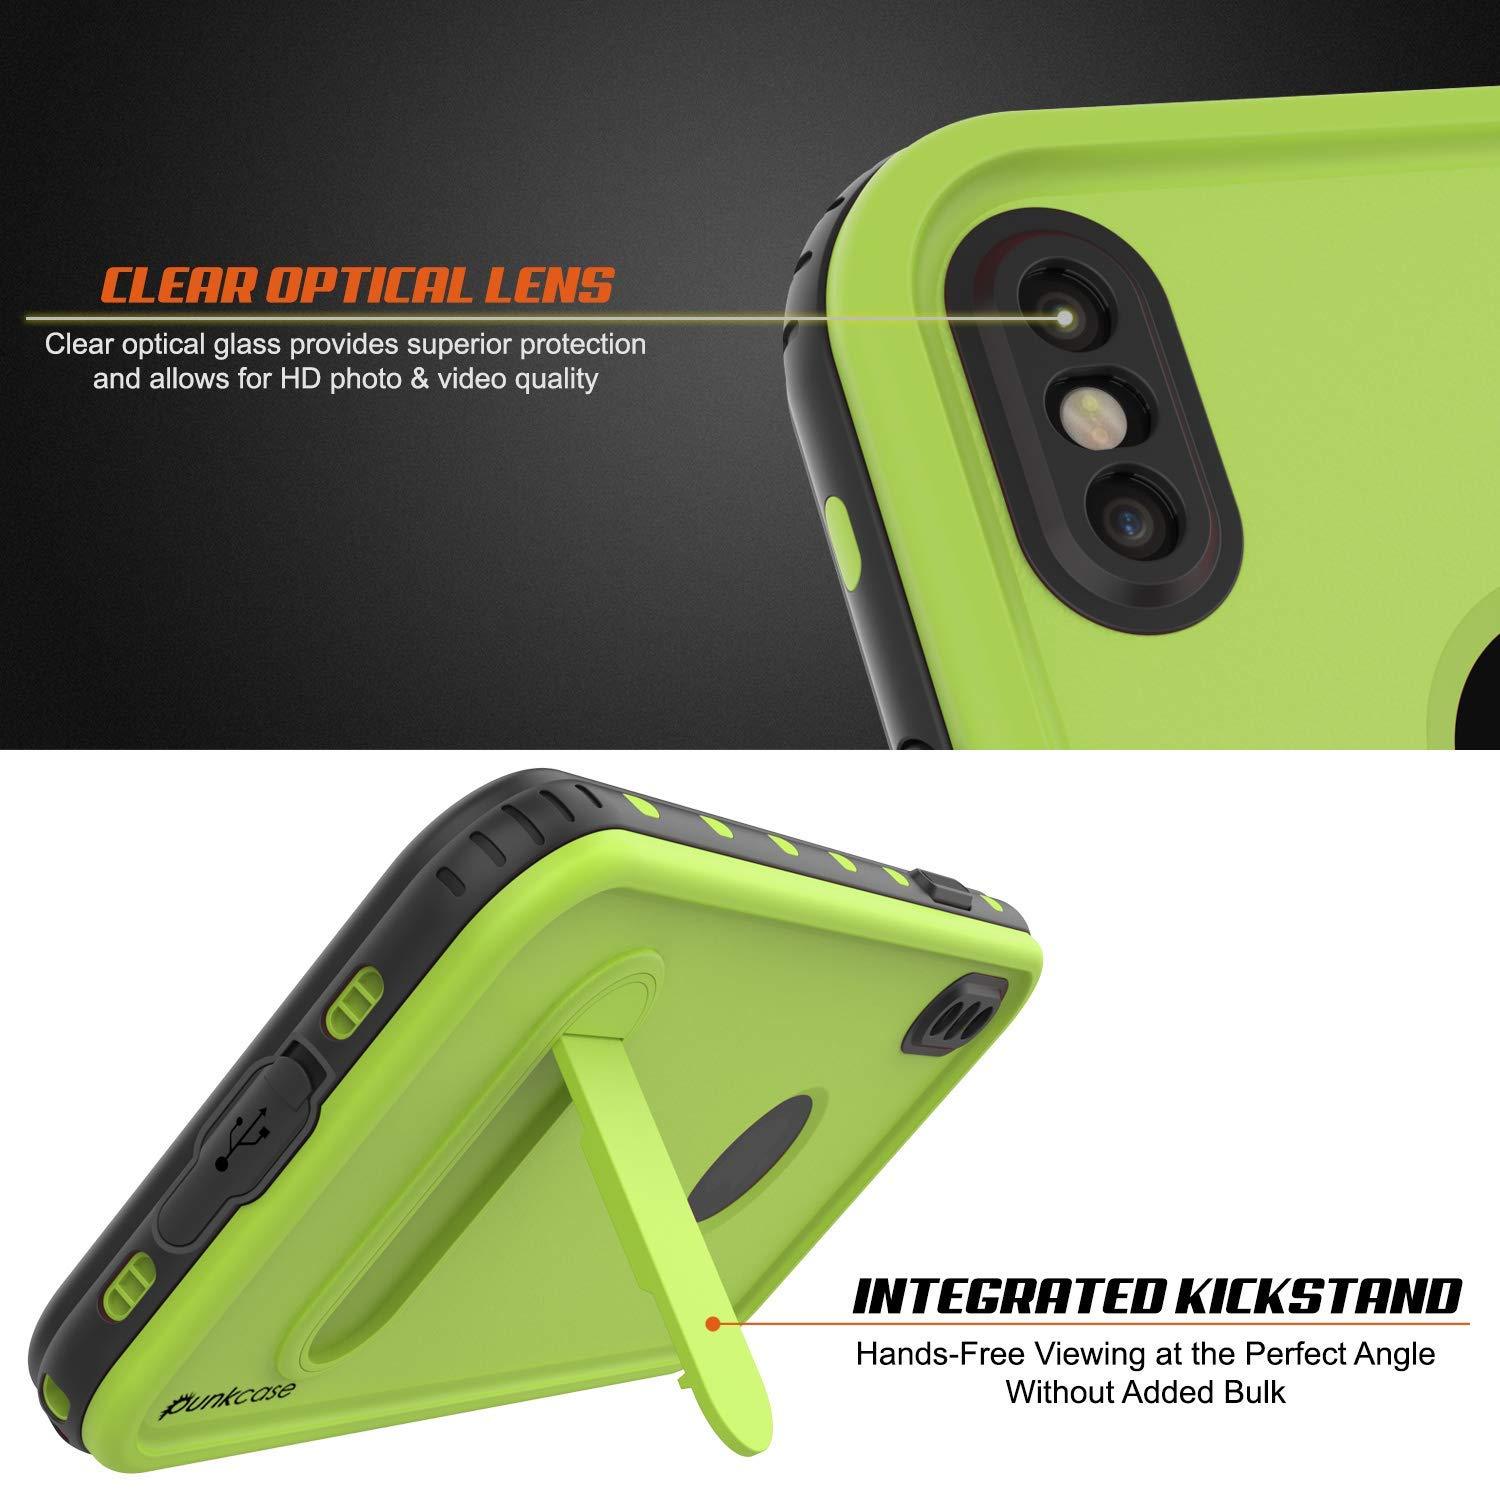 iPhone XR Waterproof Case, Punkcase [KickStud Series] Armor Cover [Green]